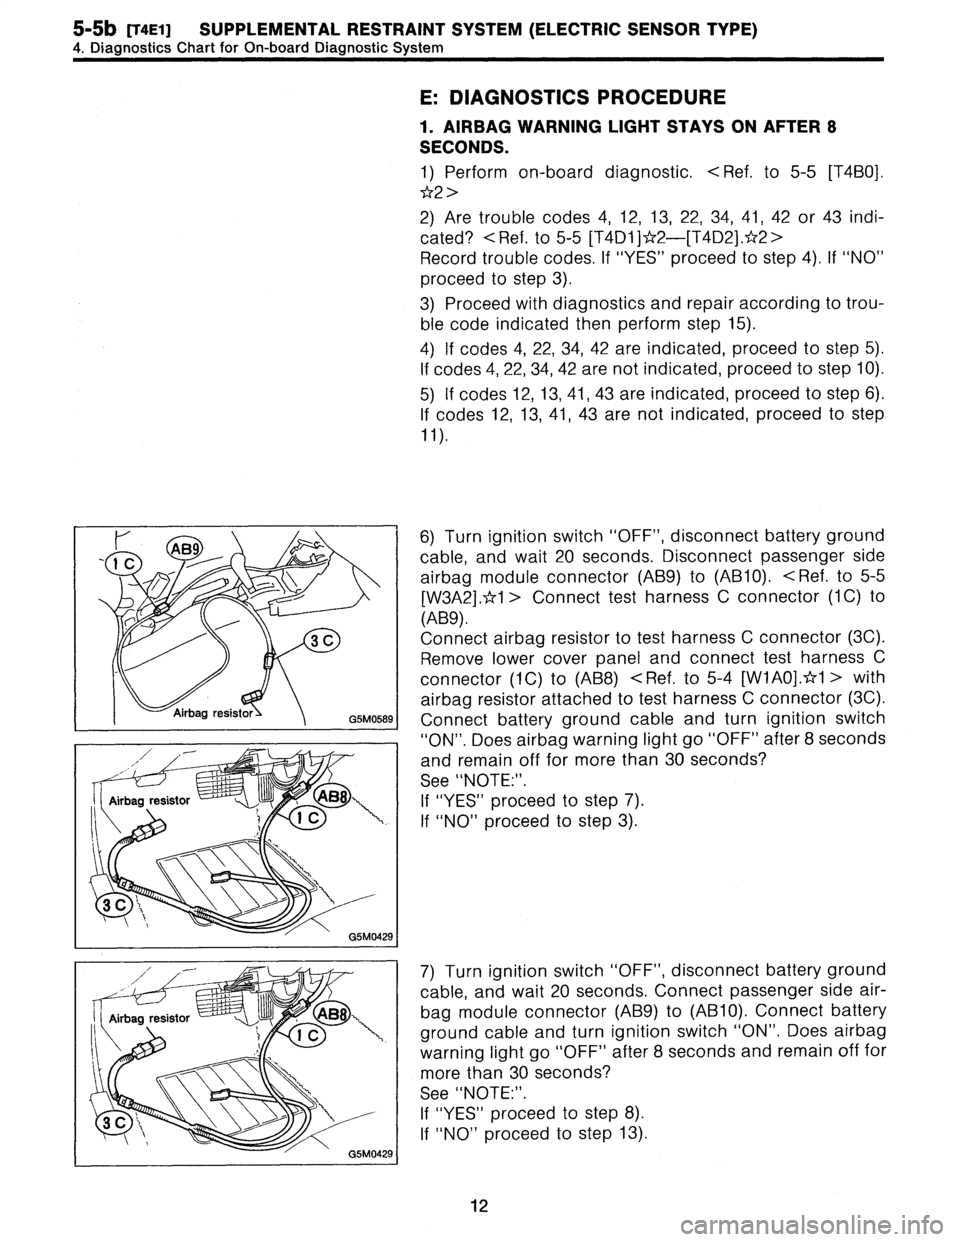 SUBARU LEGACY 1996  Service Repair Manual 
5-5b
[TaE1)
SUPPLEMENTAL
RESTRAINT
SYSTEM
(ELECTRIC
SENSOR
TYPE)

4
.
DiagnosticsChart
for
On-board
Diagnostic
System

E
:
DIAGNOSTICS
PROCEDURE

1
.
AIRBAG
WARNING
LIGHT
STAYS
ON
AFTER
8

SECONDS
.
